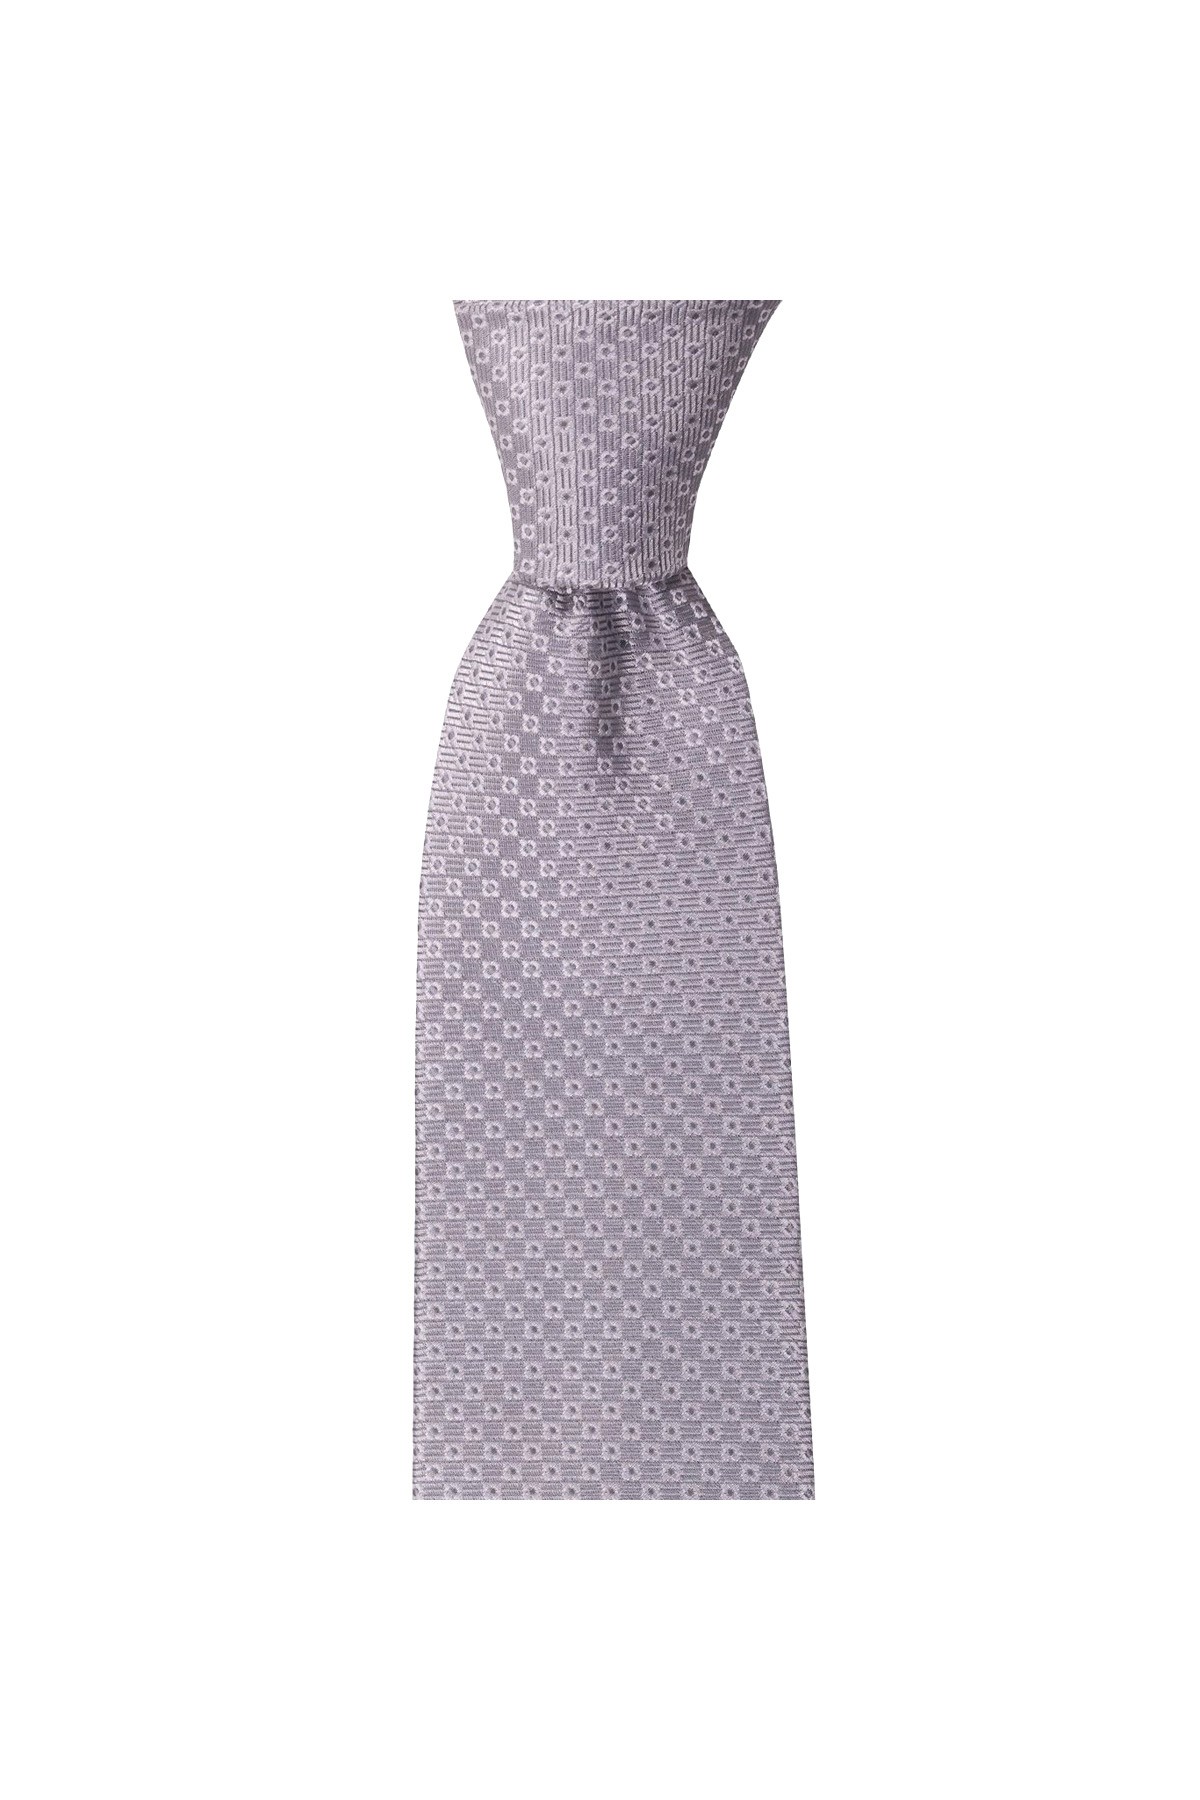 Düz renkli 8 cm genişliğinde mendilli kravat - Açık gri